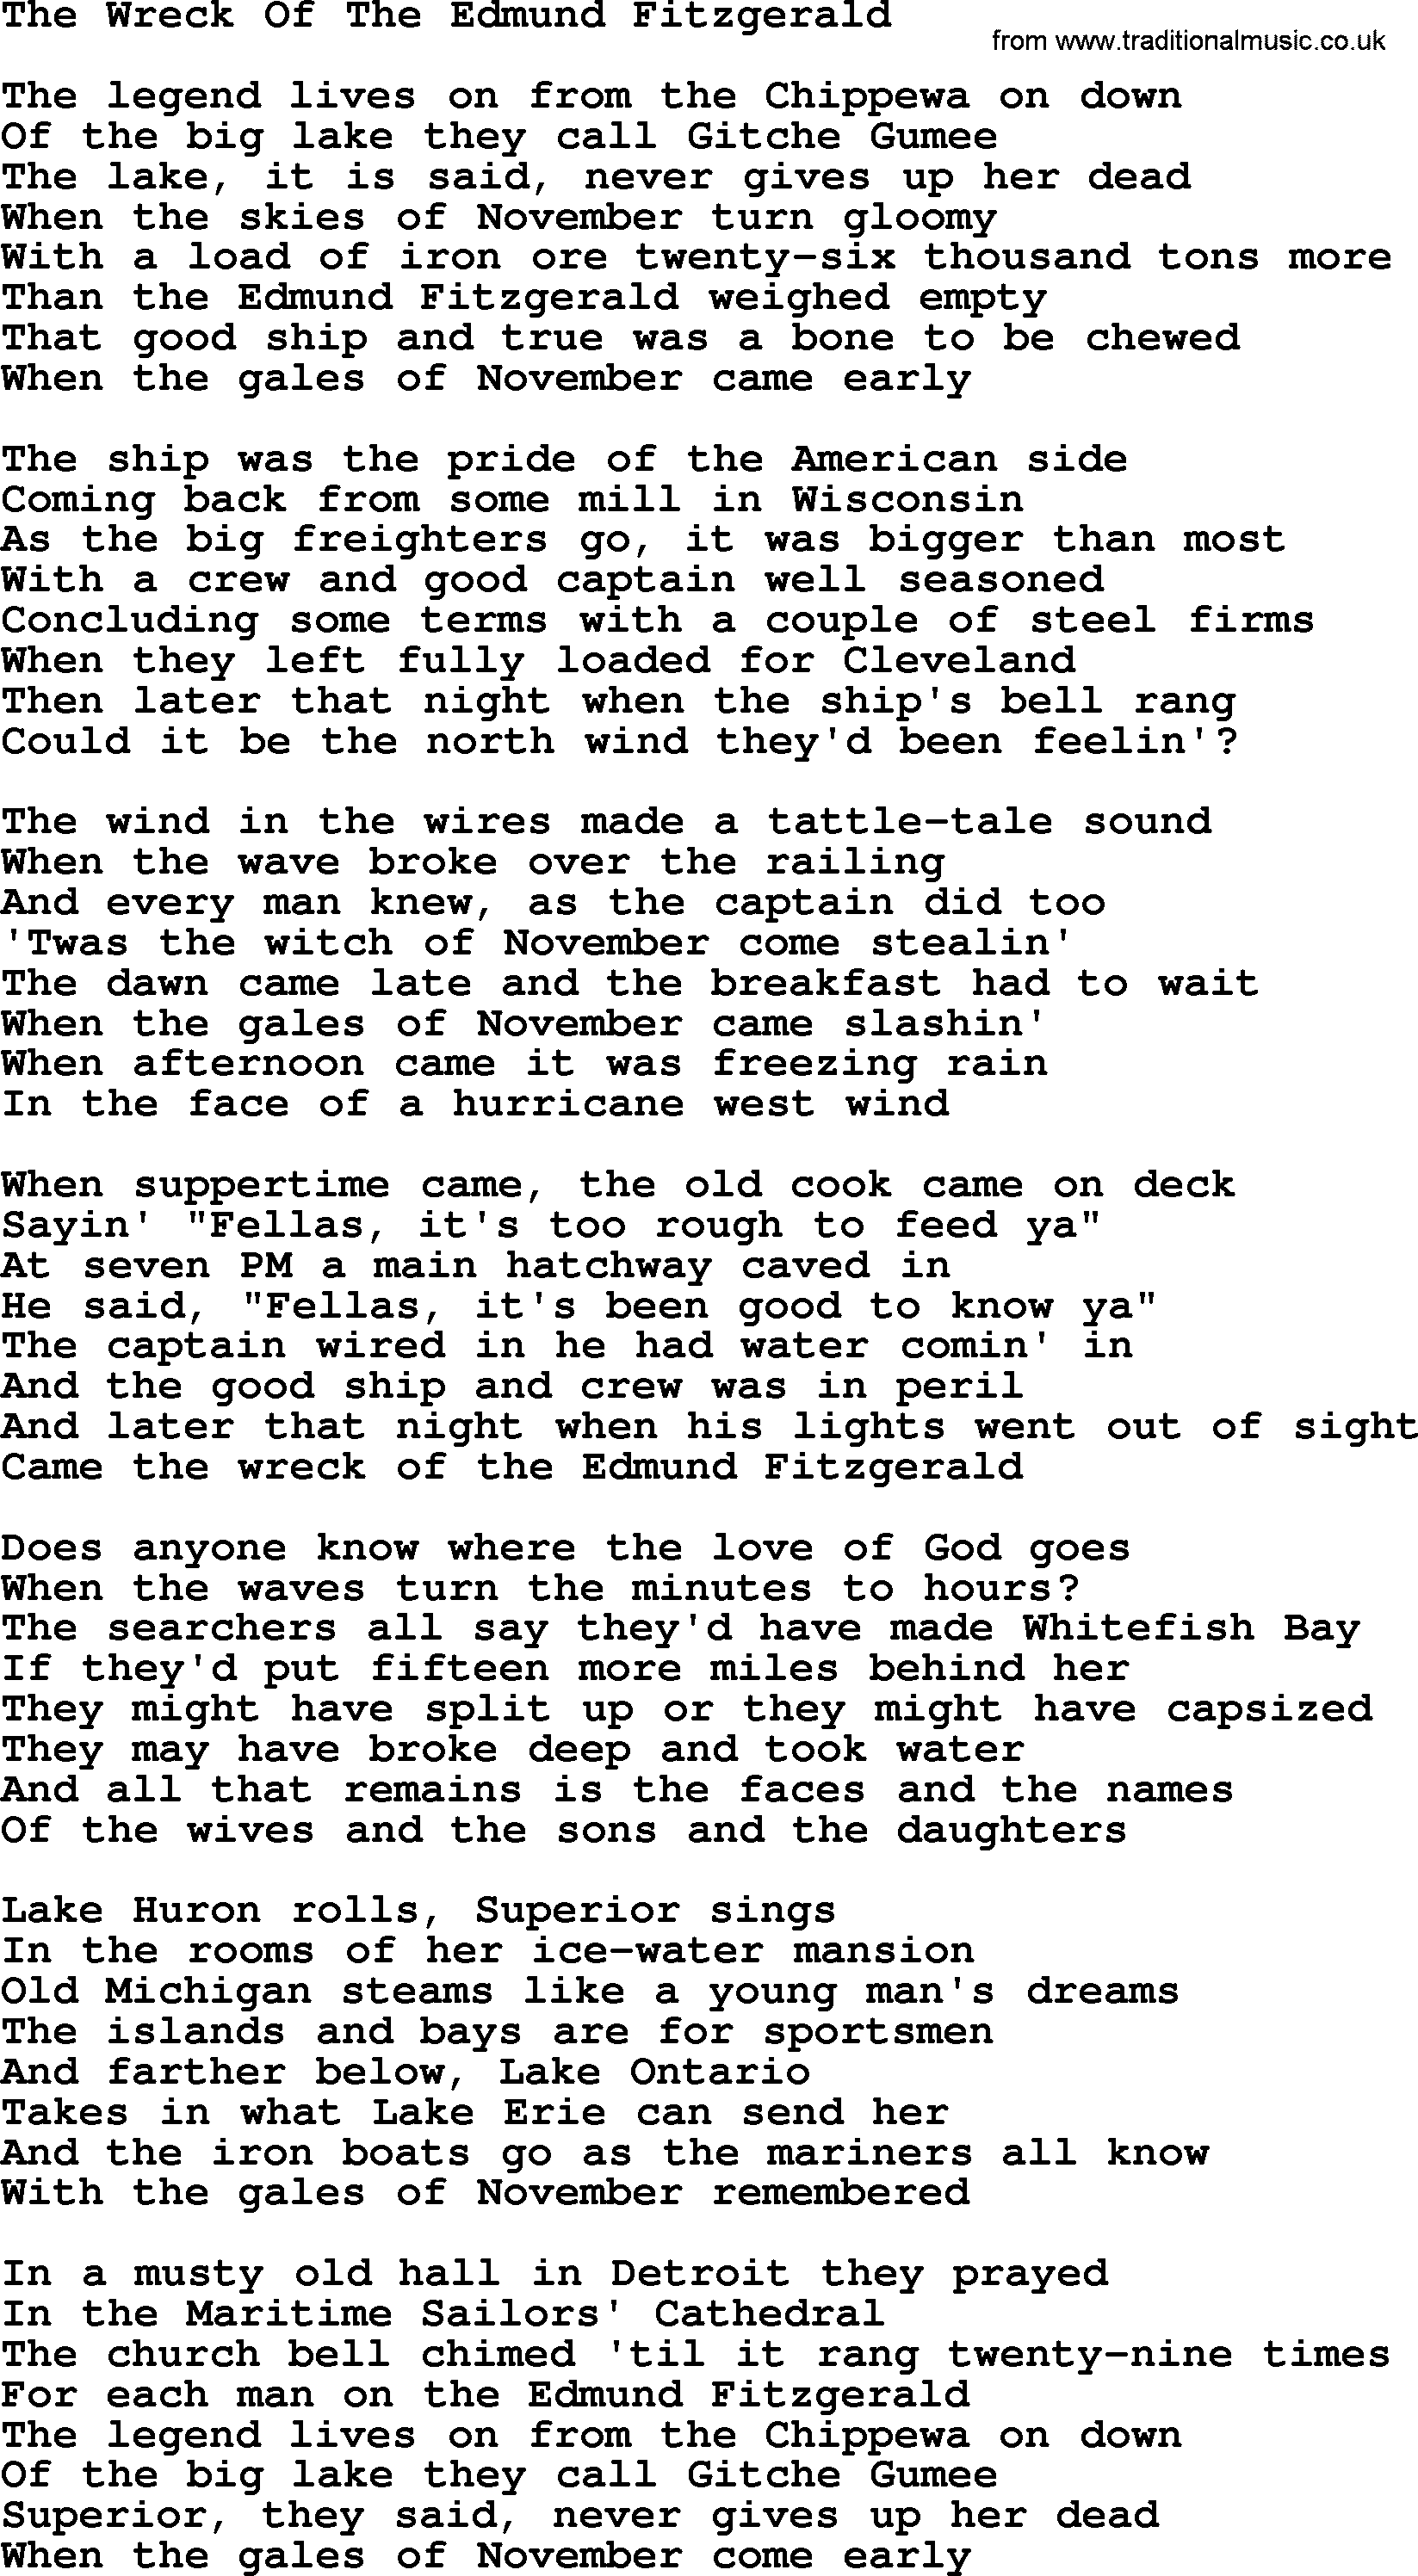 Gordon Lightfoot song The Wreck Of The Edmund Fitzgerald, lyrics